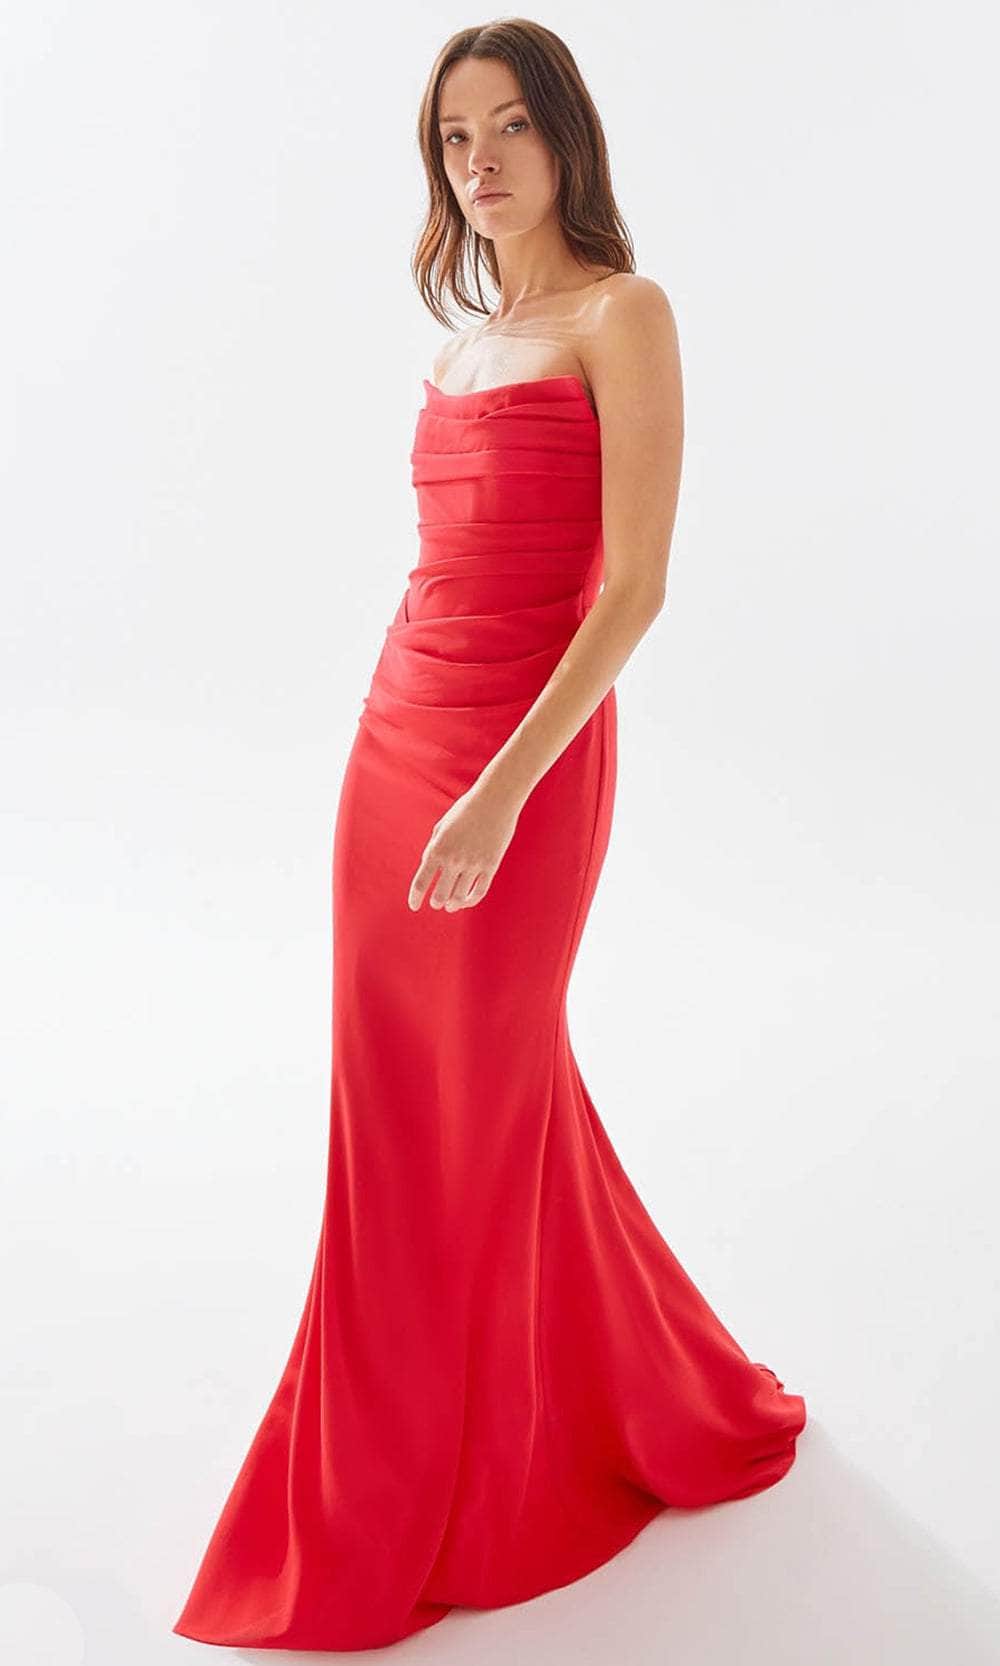 Tarik Ediz 52017 - Strapless Sheath Prom Dress In Red